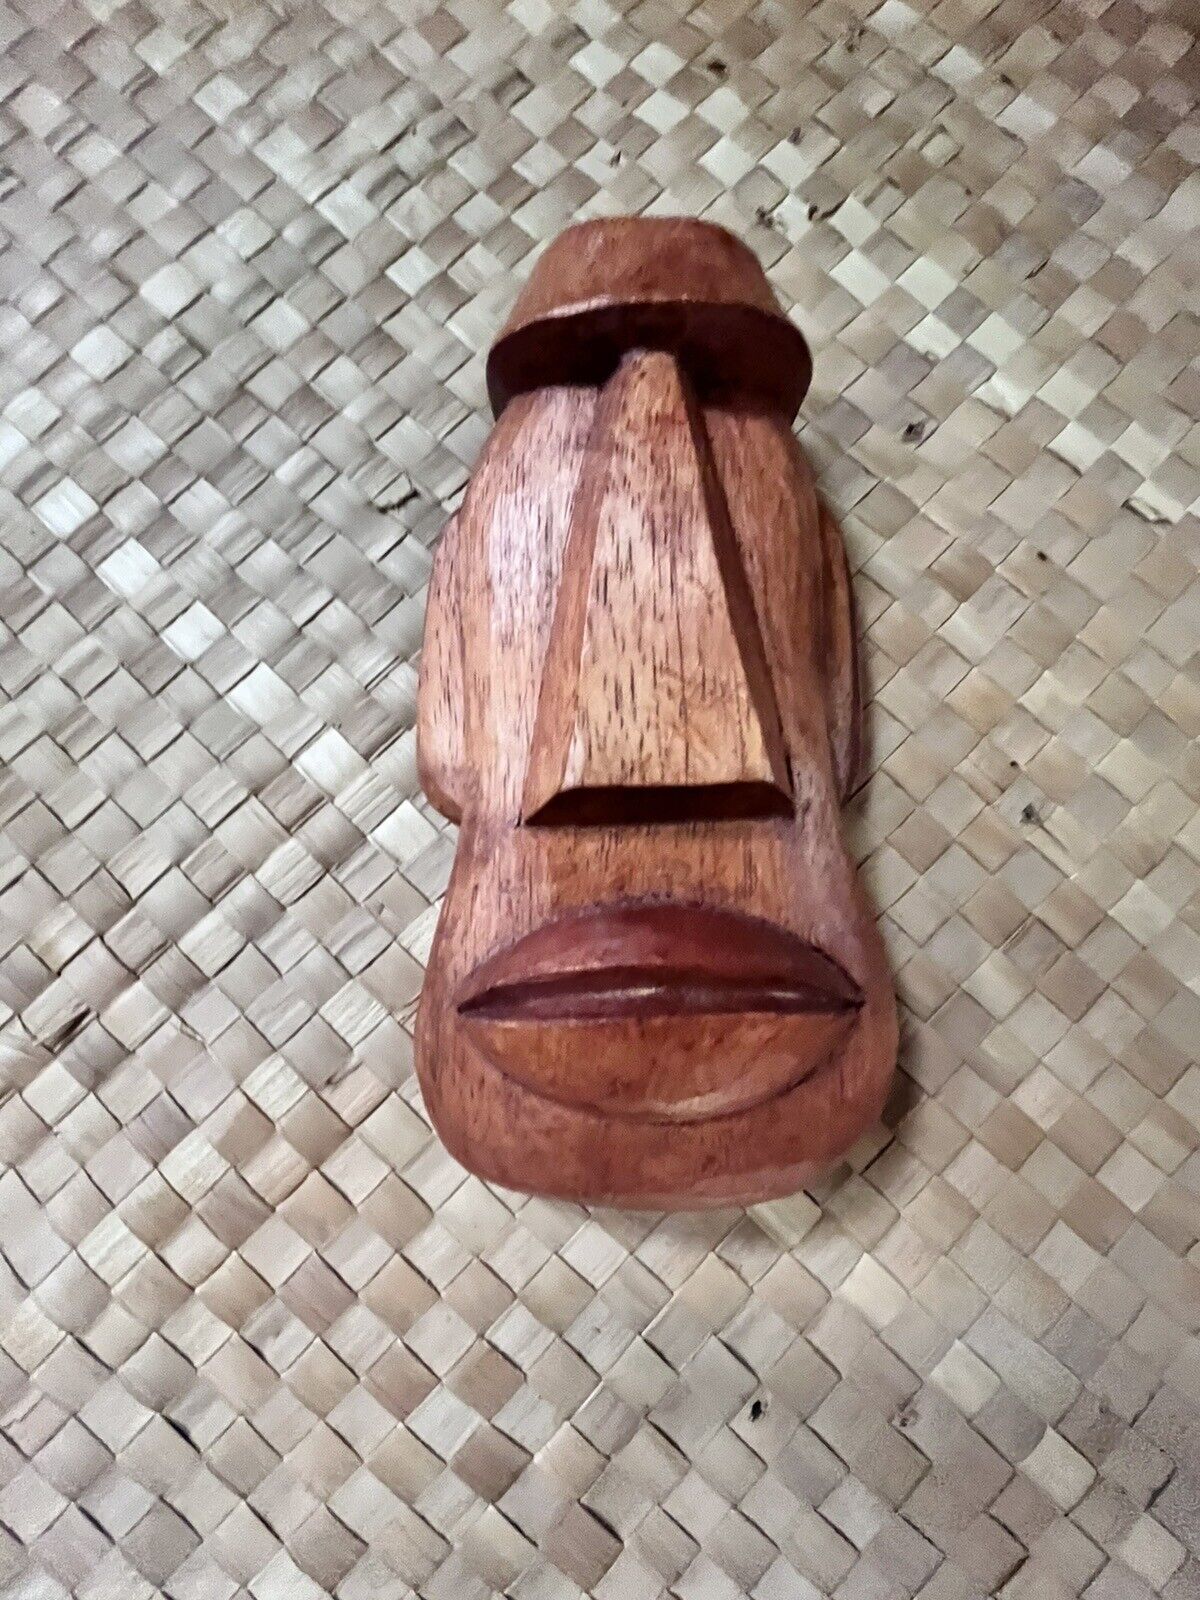 New Mini-Mask Doug Horne Designed Fat Moai Tiki Mask by Smokin' Tikis Hawaii